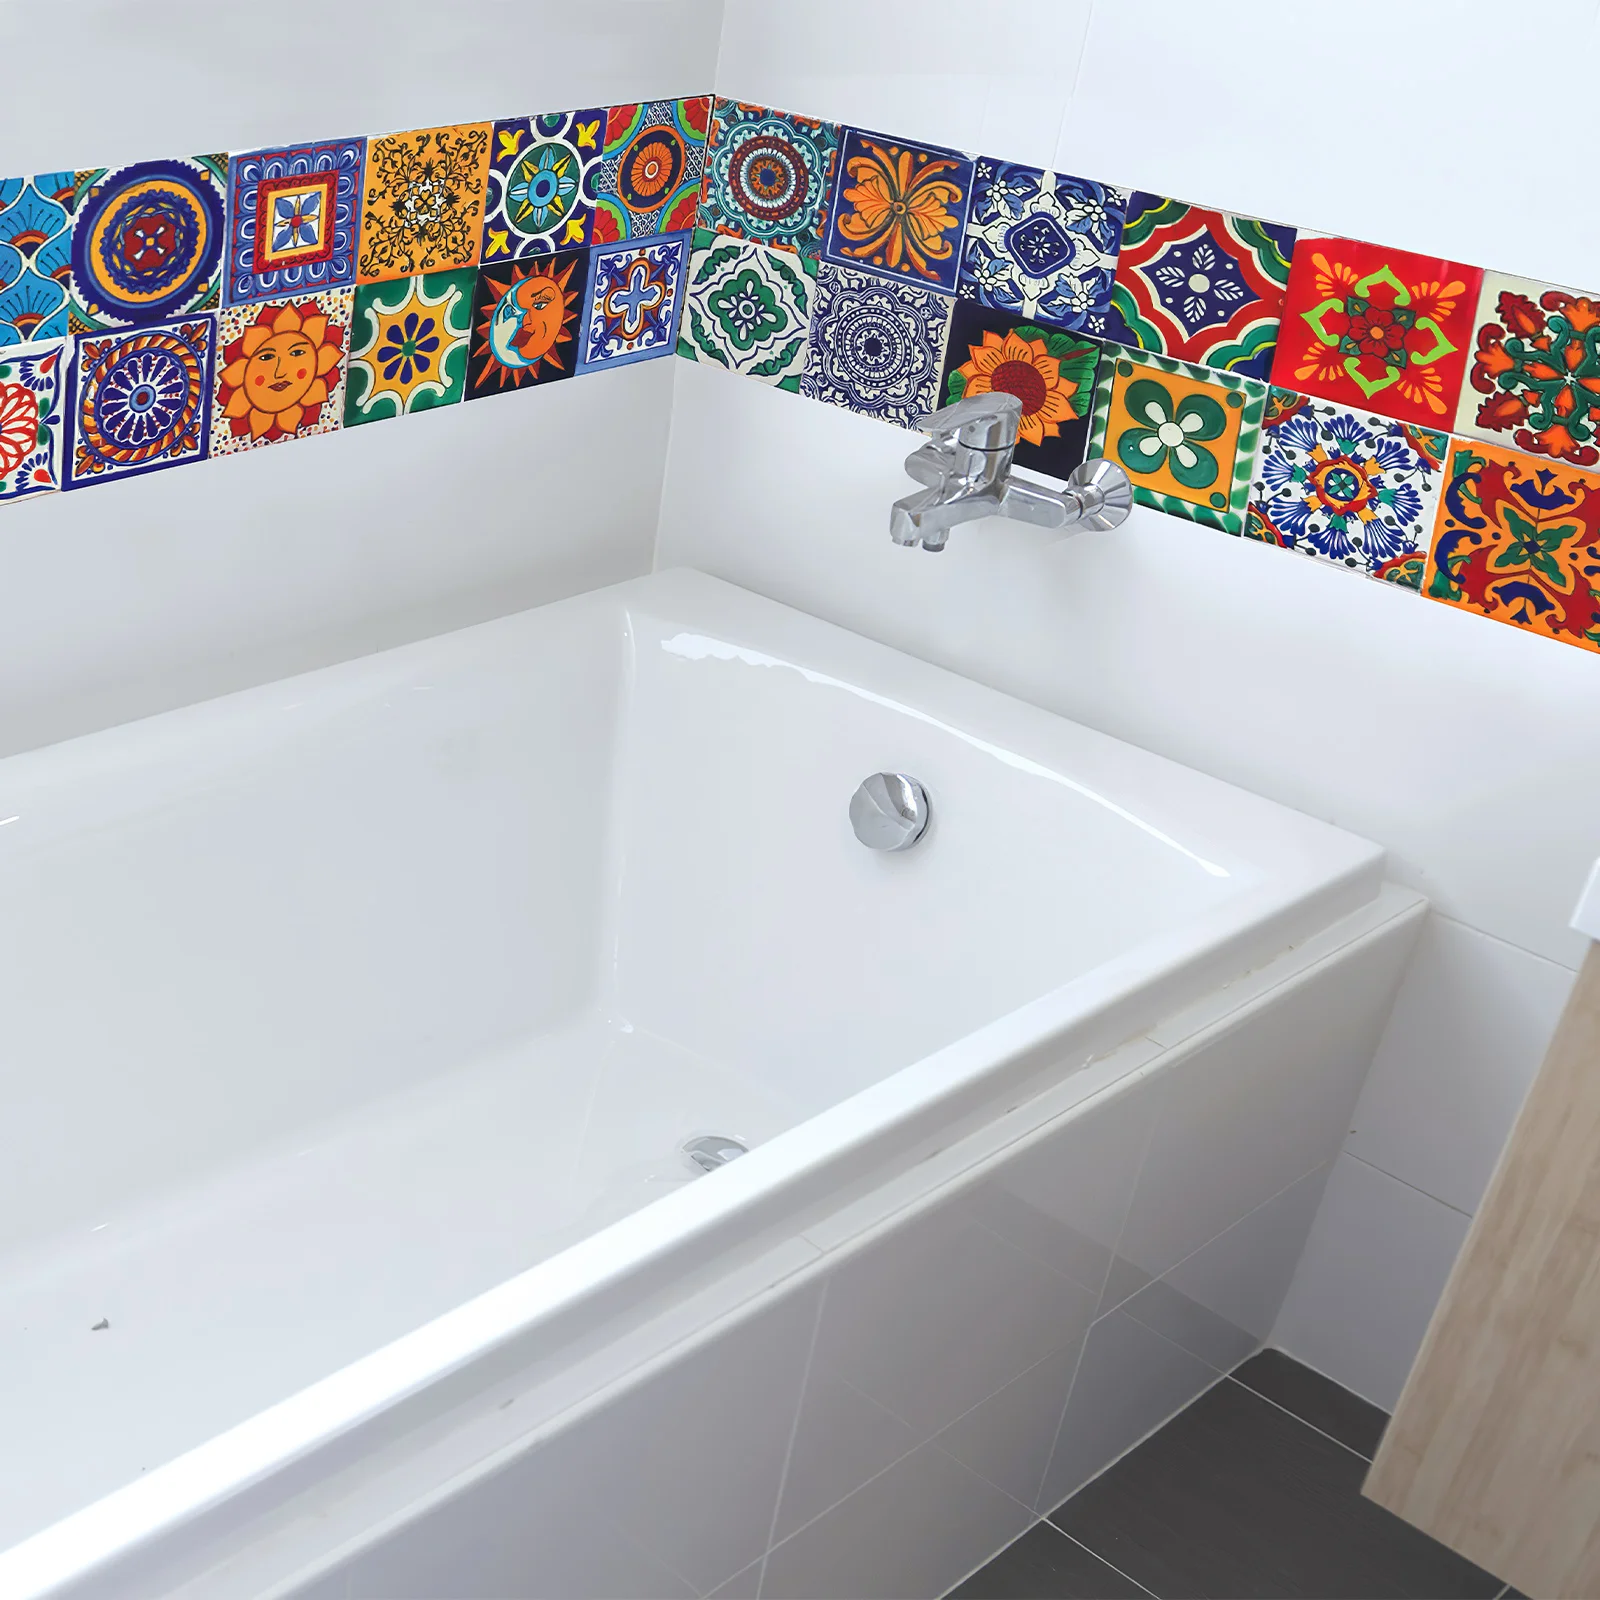 

24 Sheets Vintage Tile Stickers Kitchen Backsplash Trim Peel Waterproof Wall Borders Mexican Decor Bathroom Brick Tiles Floor